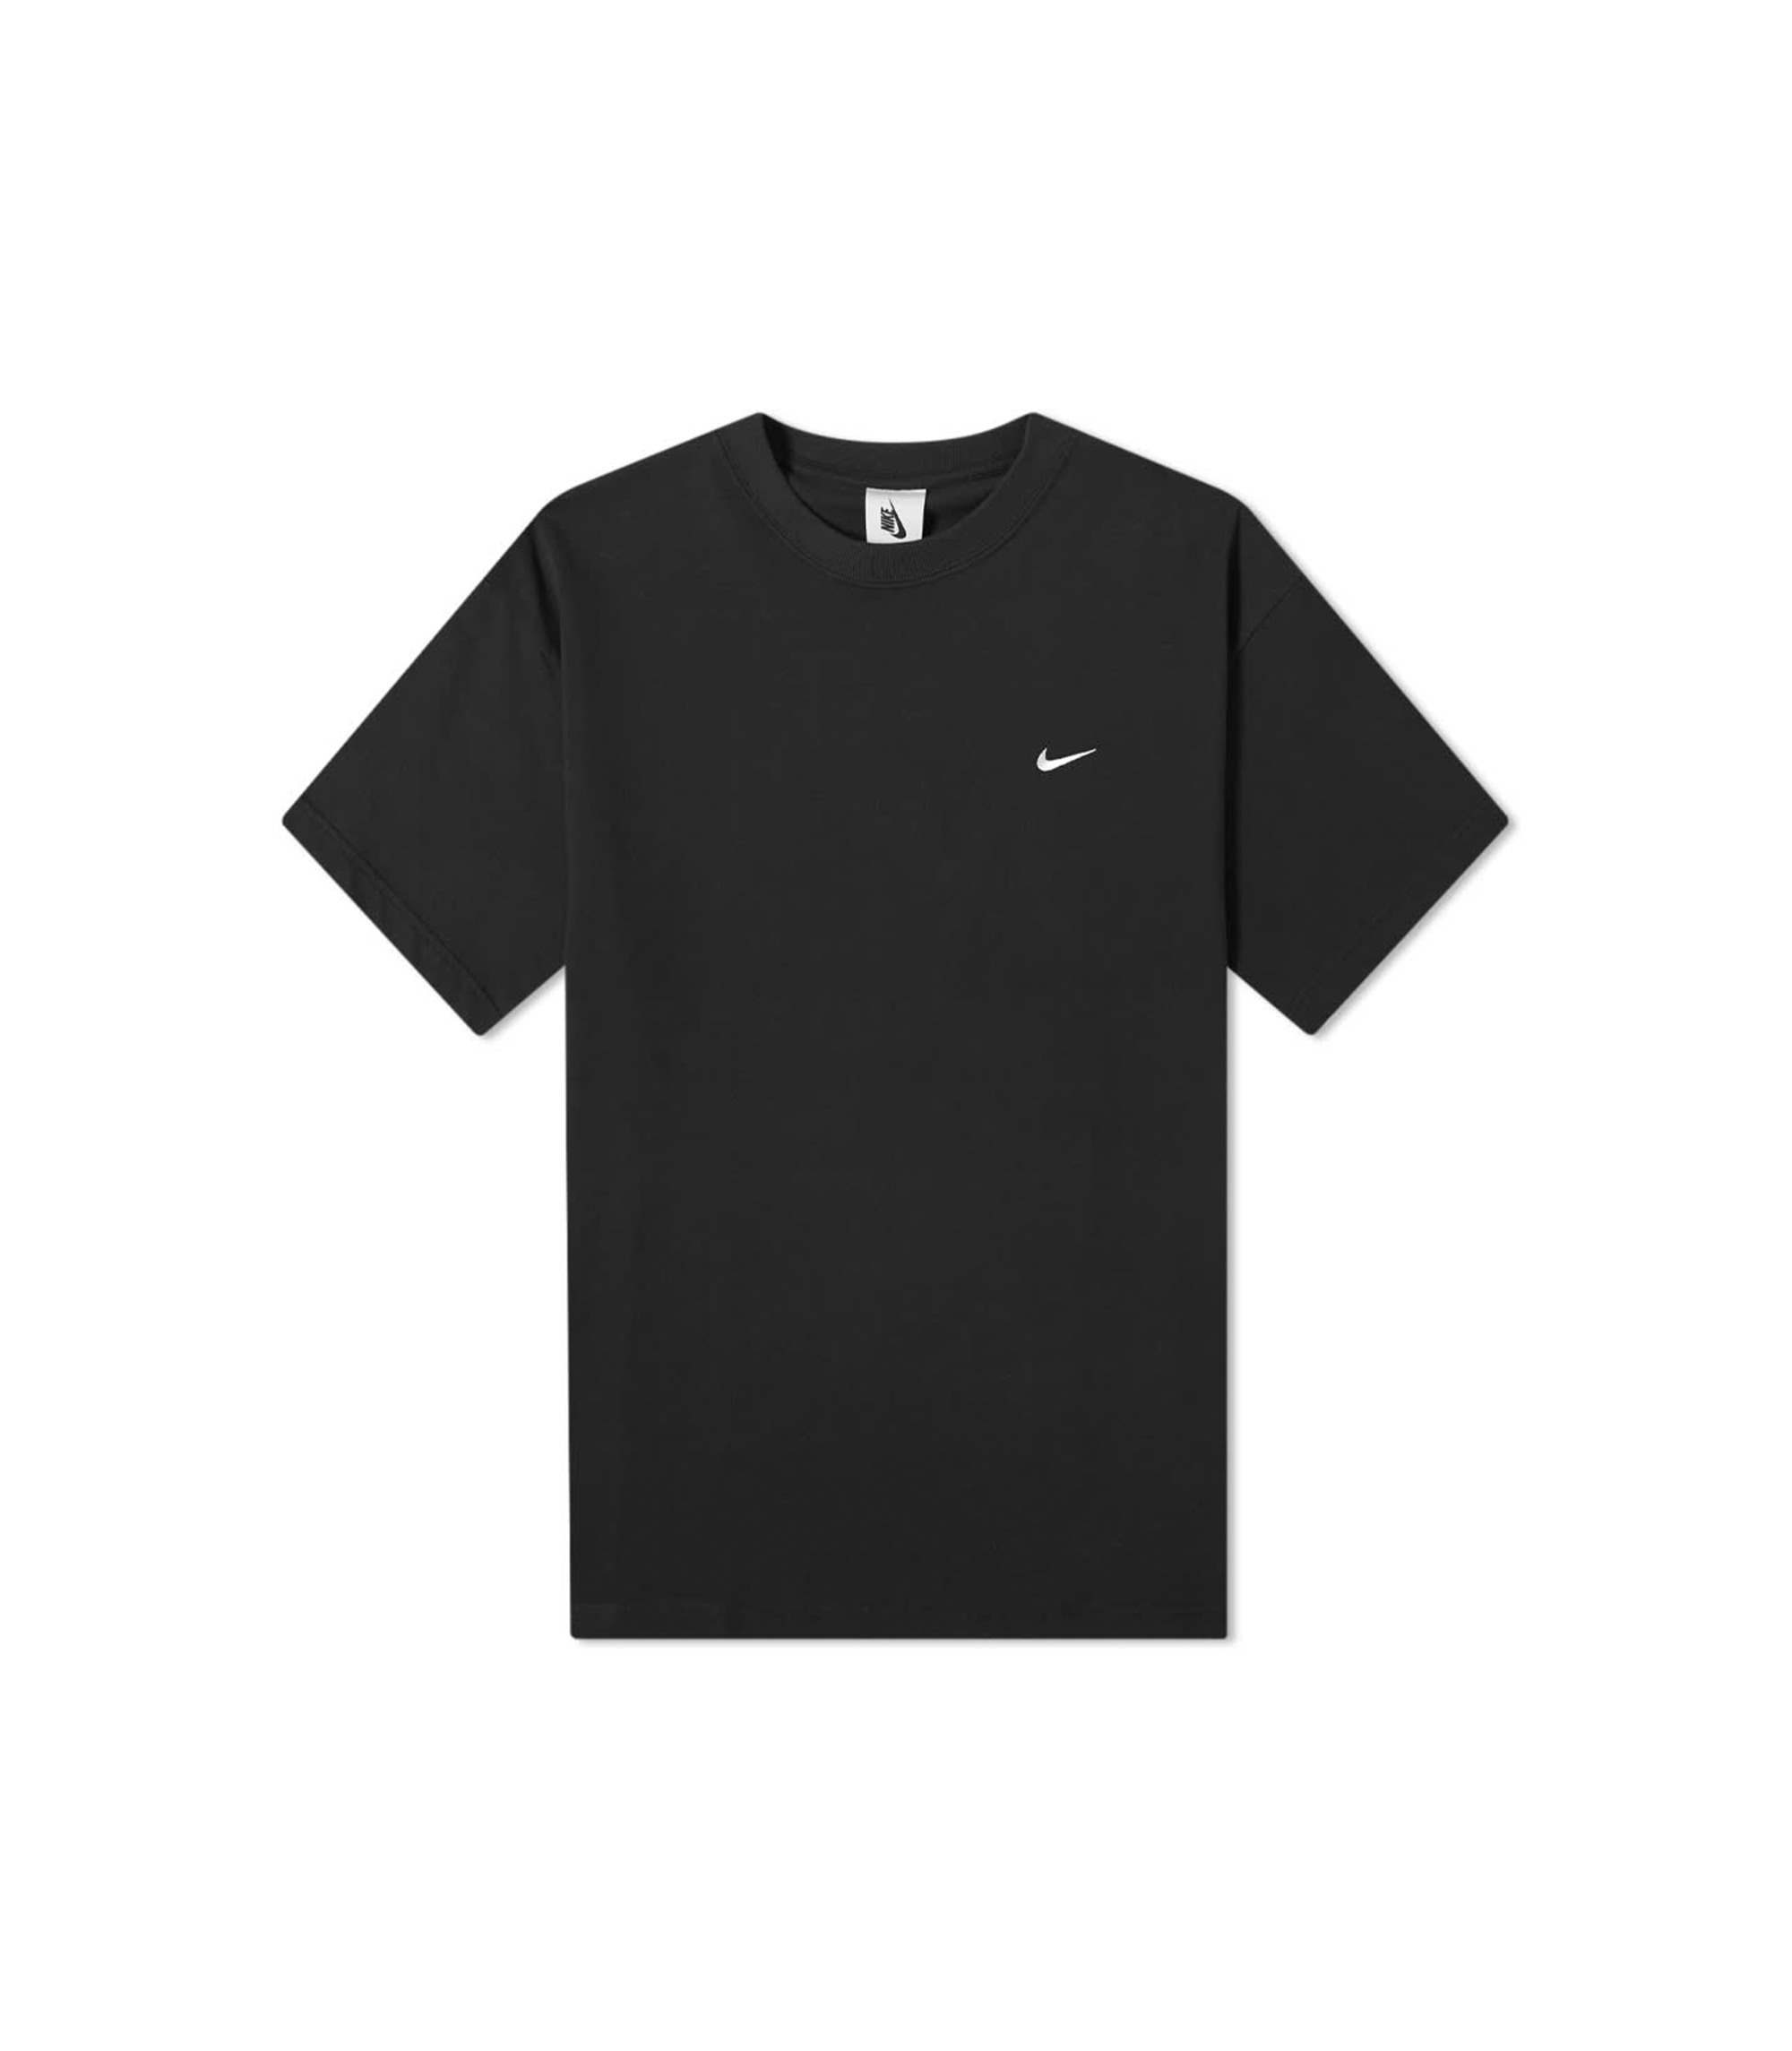 NRG T-Shirt - Black / White